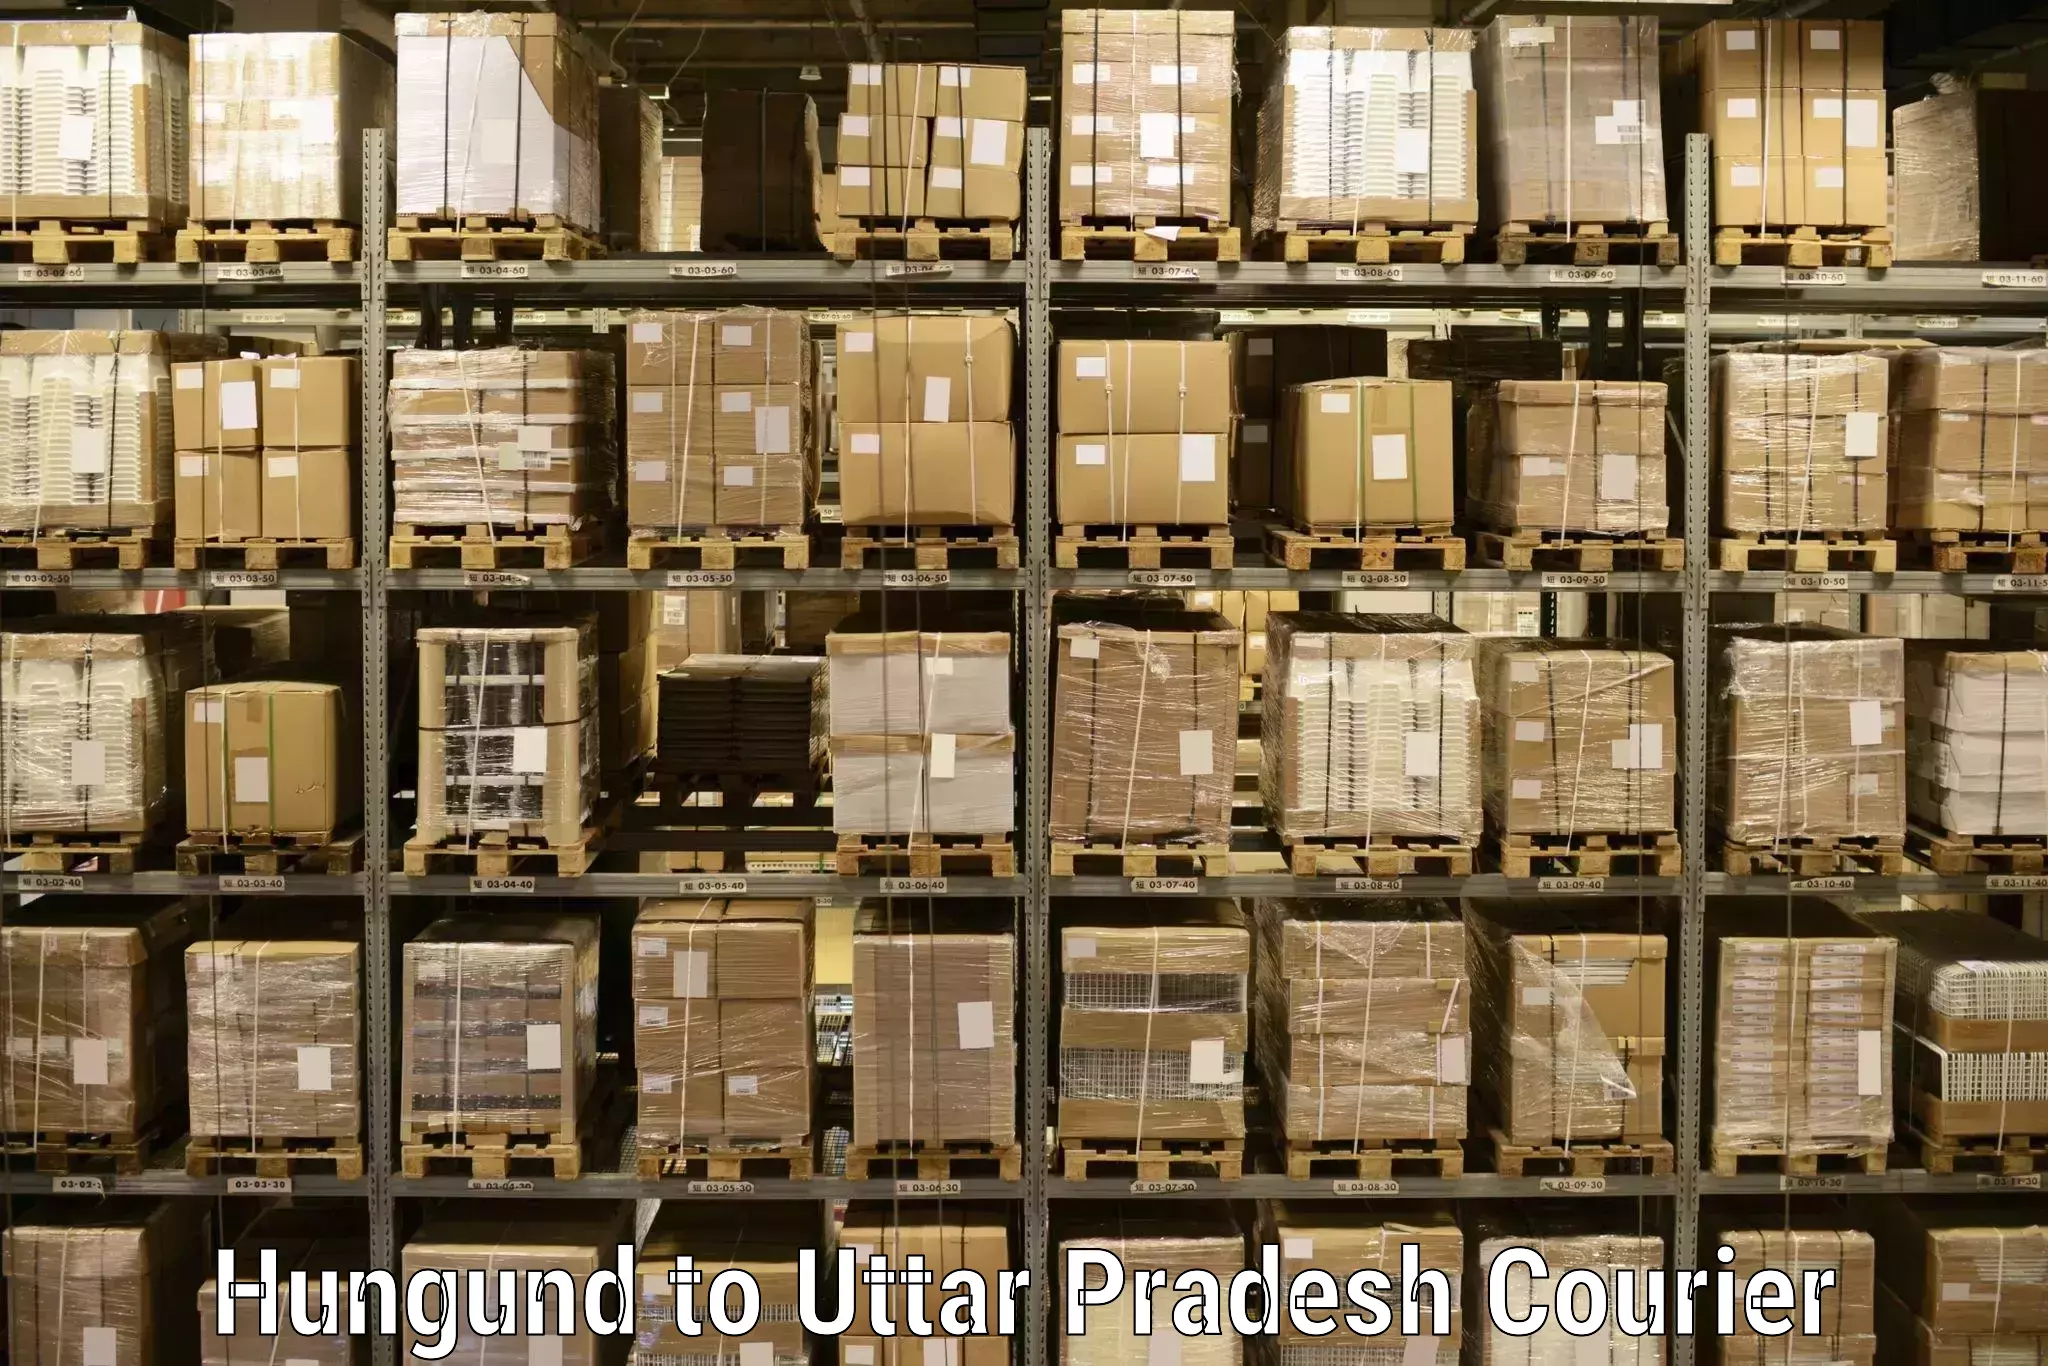 Courier service comparison Hungund to Sonbhadra